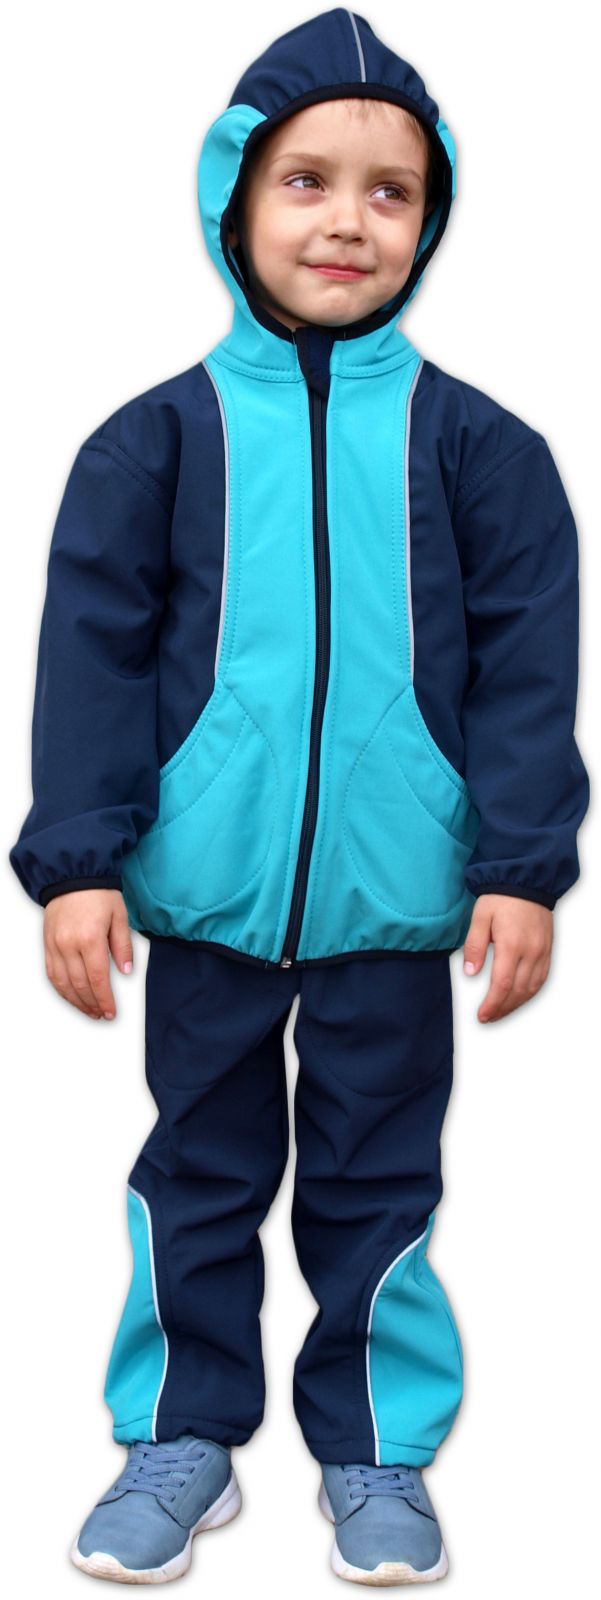 Softshell Jacke für Kinder, dunkel blau/türkis, Gr. 122/128